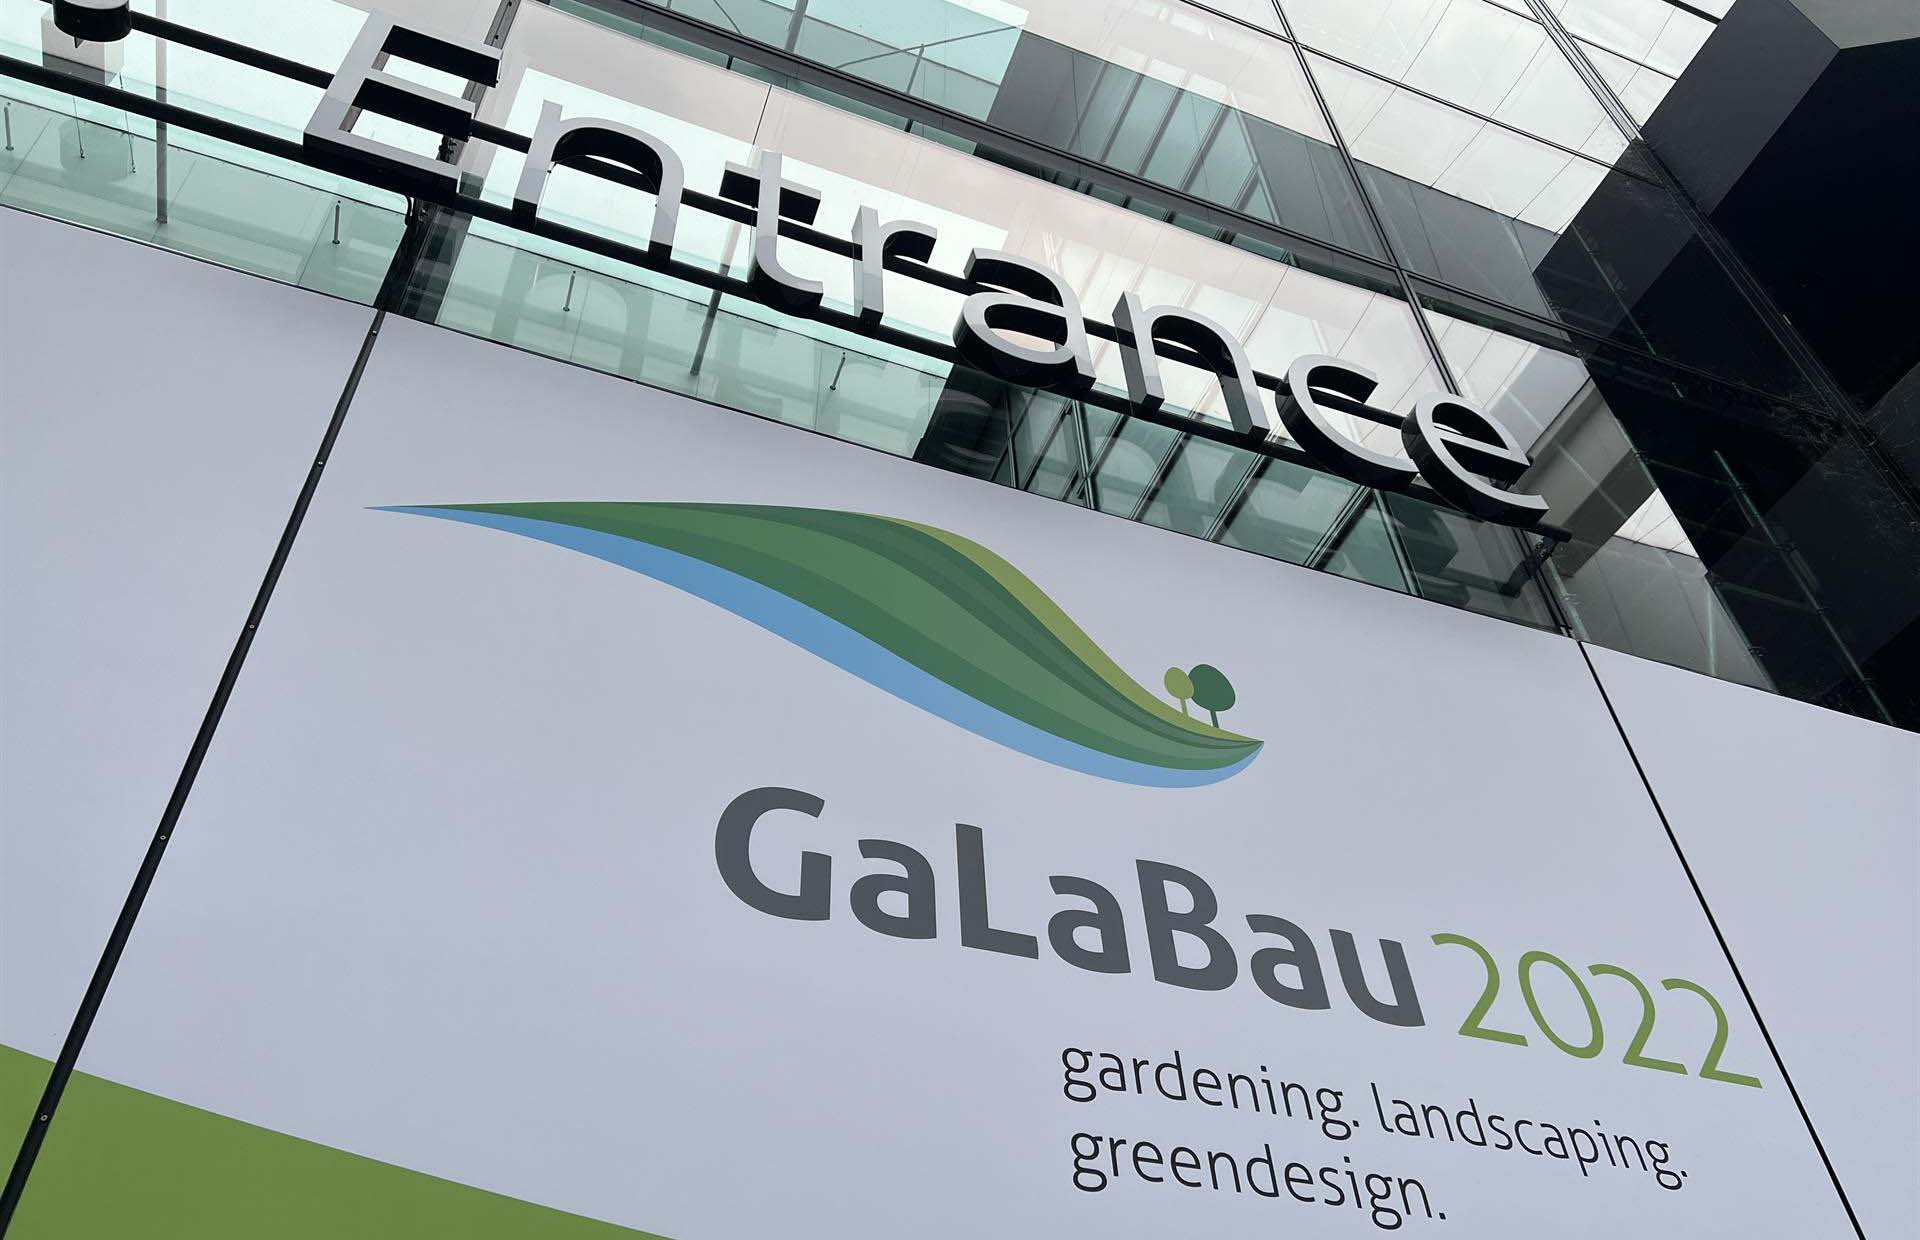  Landschaftsgärtner-Cup 2022: endlich wieder live in Nürnberg, die GaLaBau-Messe 2022